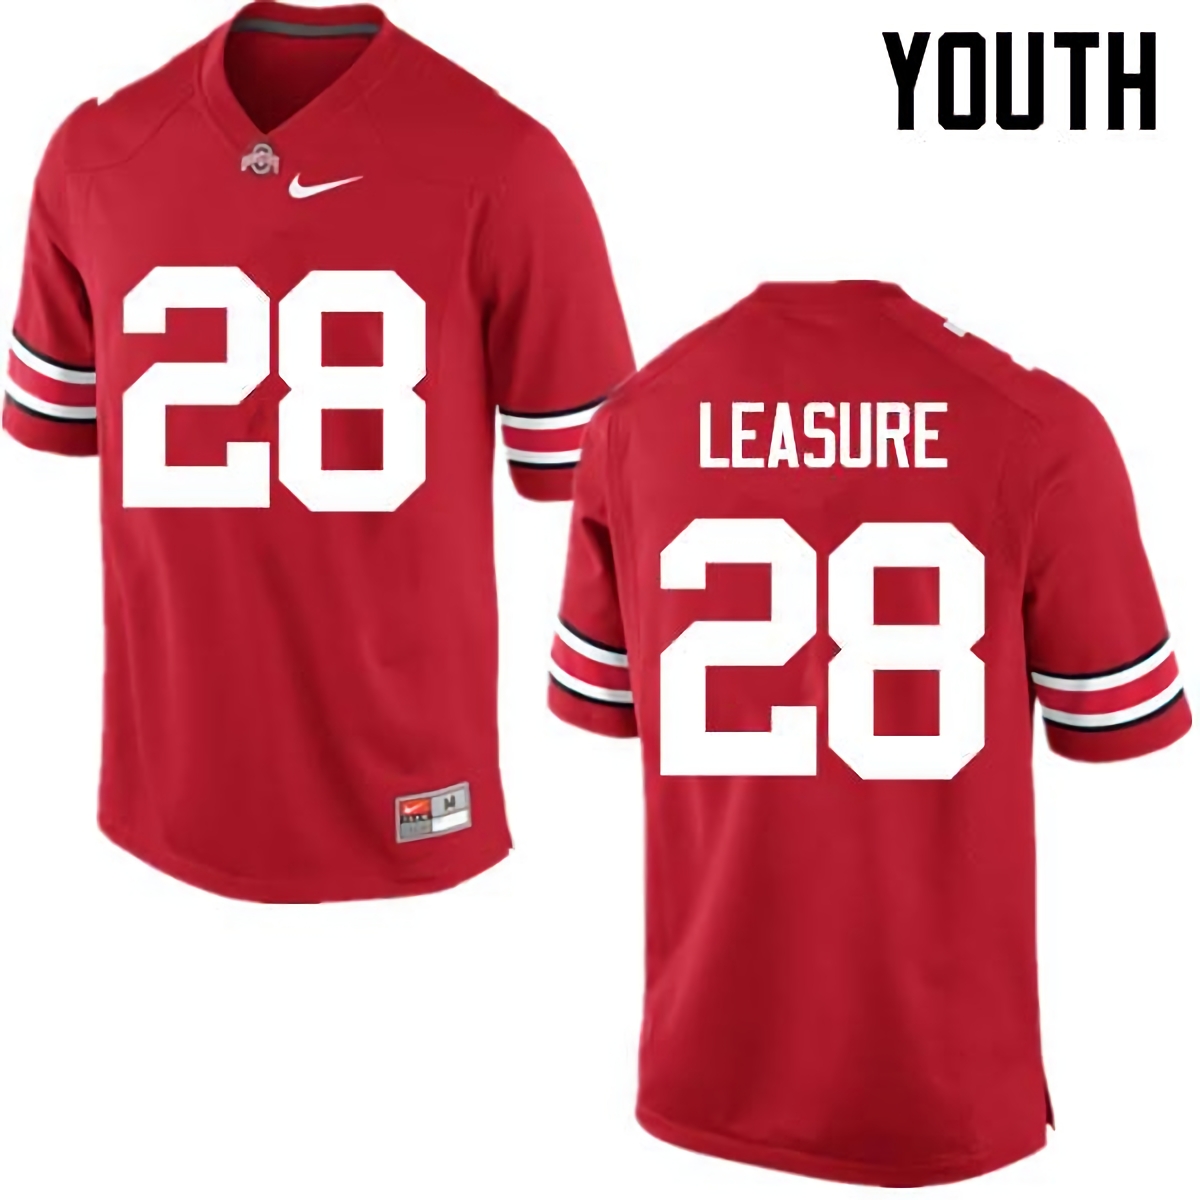 Jordan Leasure Ohio State Buckeyes Youth NCAA #28 Nike Red College Stitched Football Jersey WMR1656EC